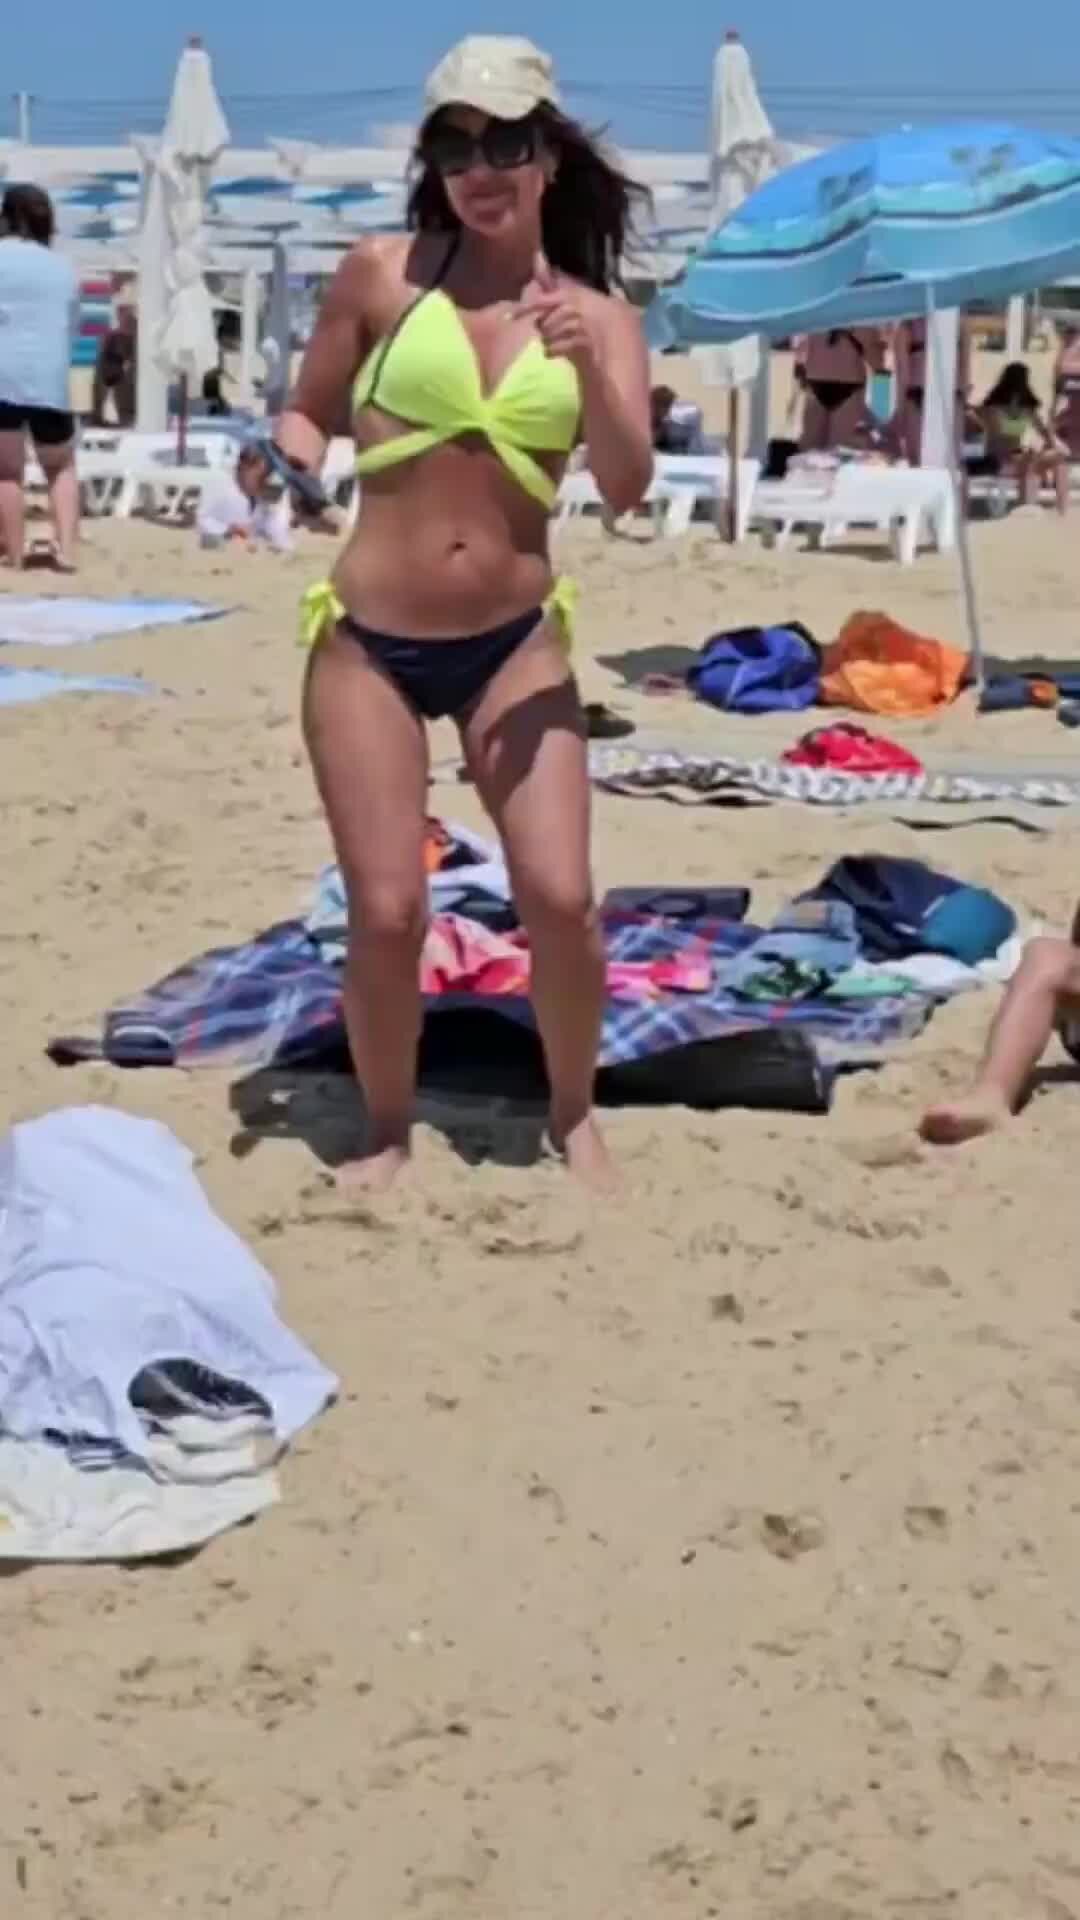 Порно друзья пляж: видео найдено на Инцестик